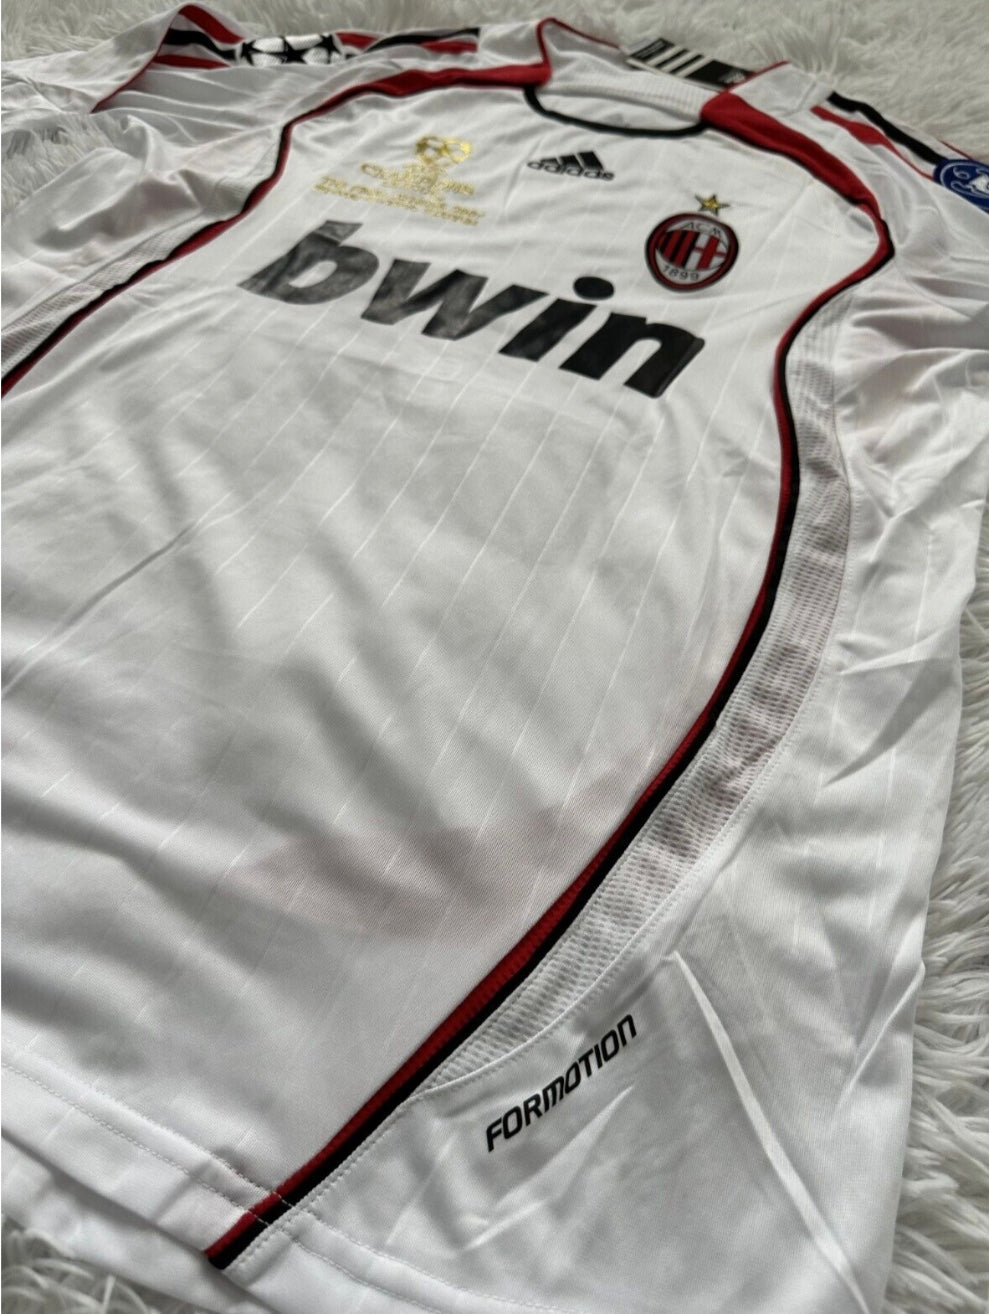 Andrea Pirlo AC Milan Away Kit Iconic Classic 2006/07 UEFA Champions League Final Retro Jersey - White